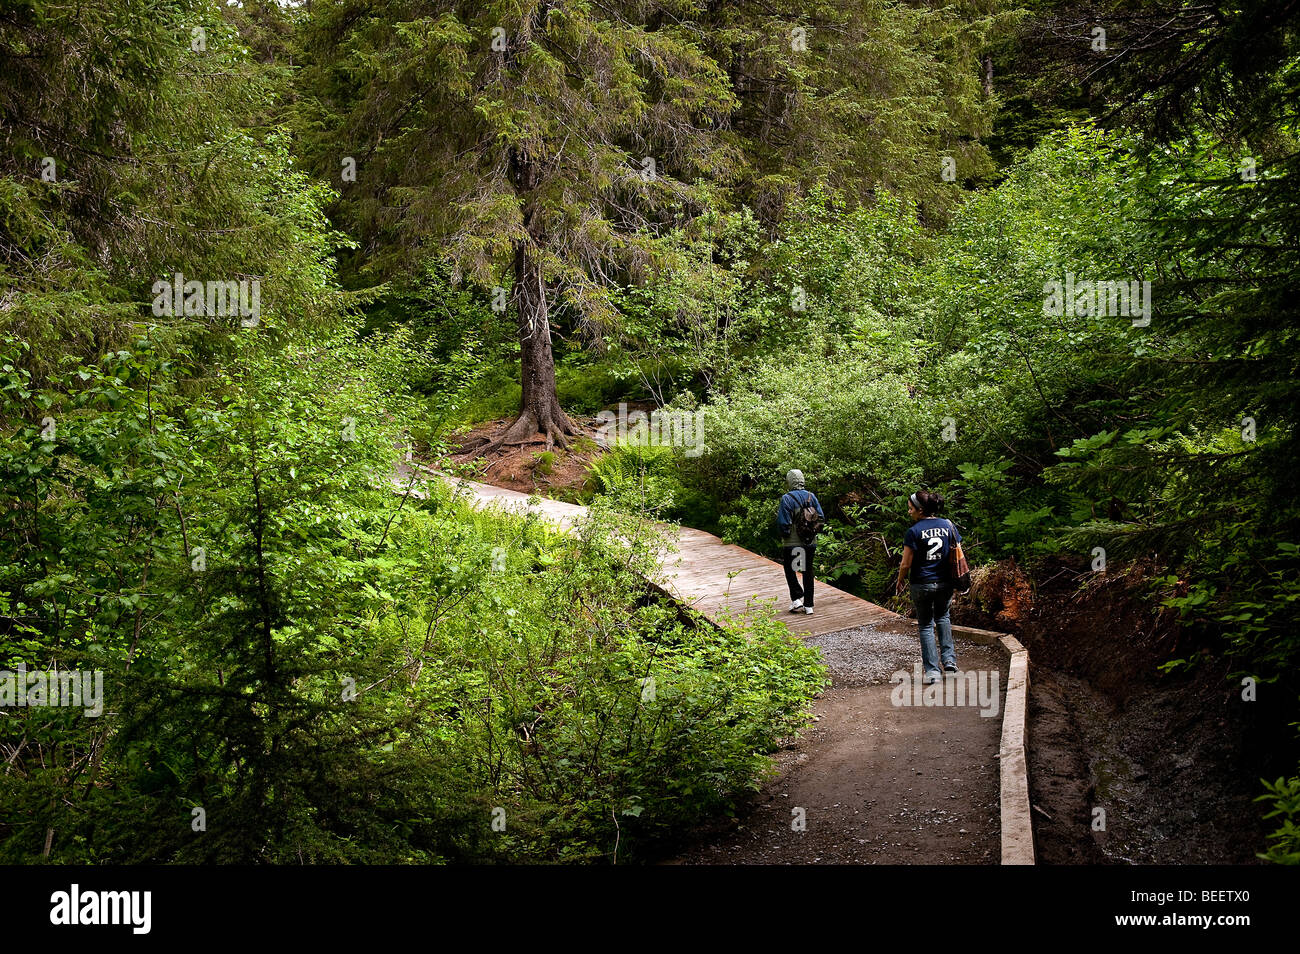 Hiking trail, Winner Creek, Chugach National Forest, Alaska, USA Stock Photo